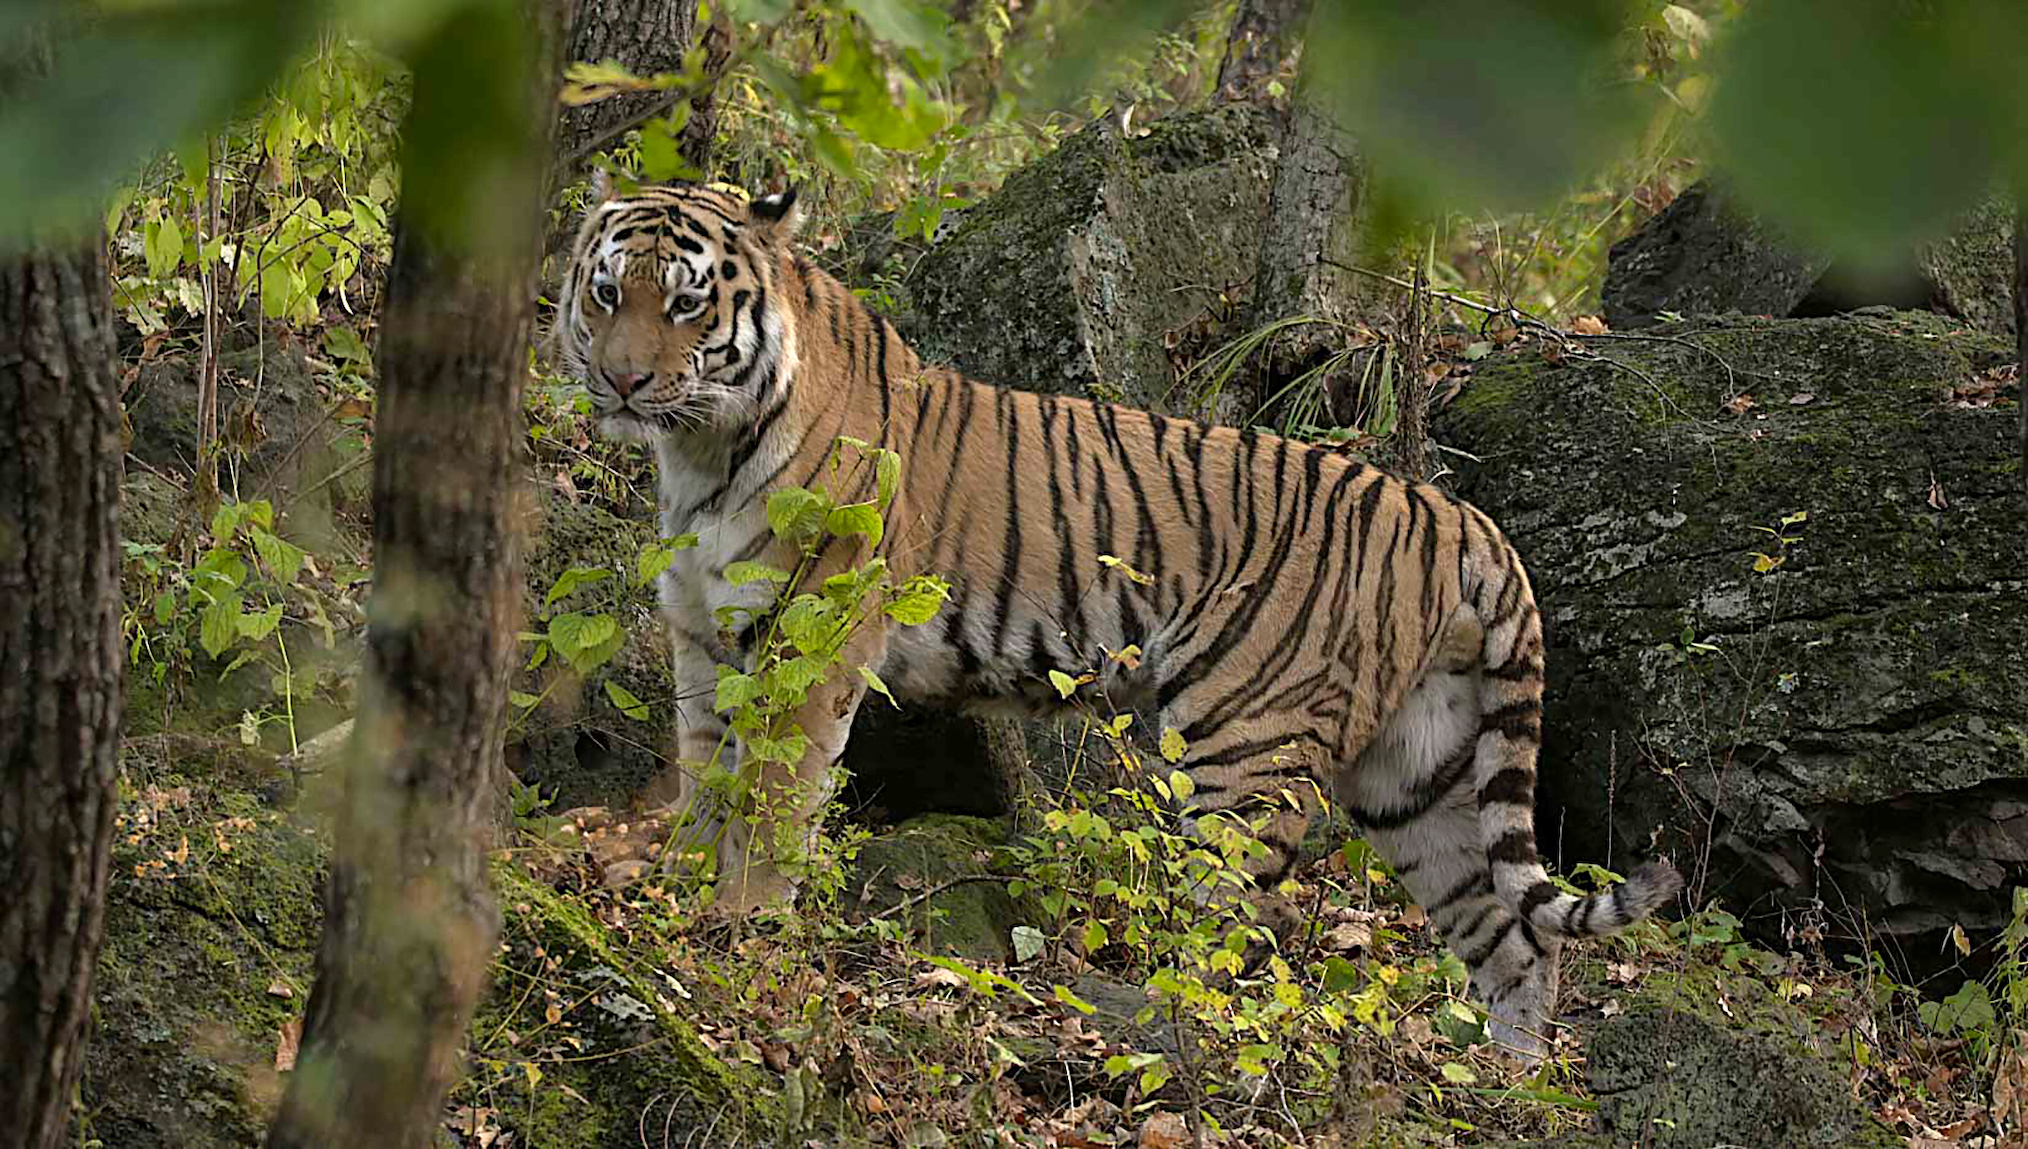 Siberian Tiger in Russia's Wild Tiger